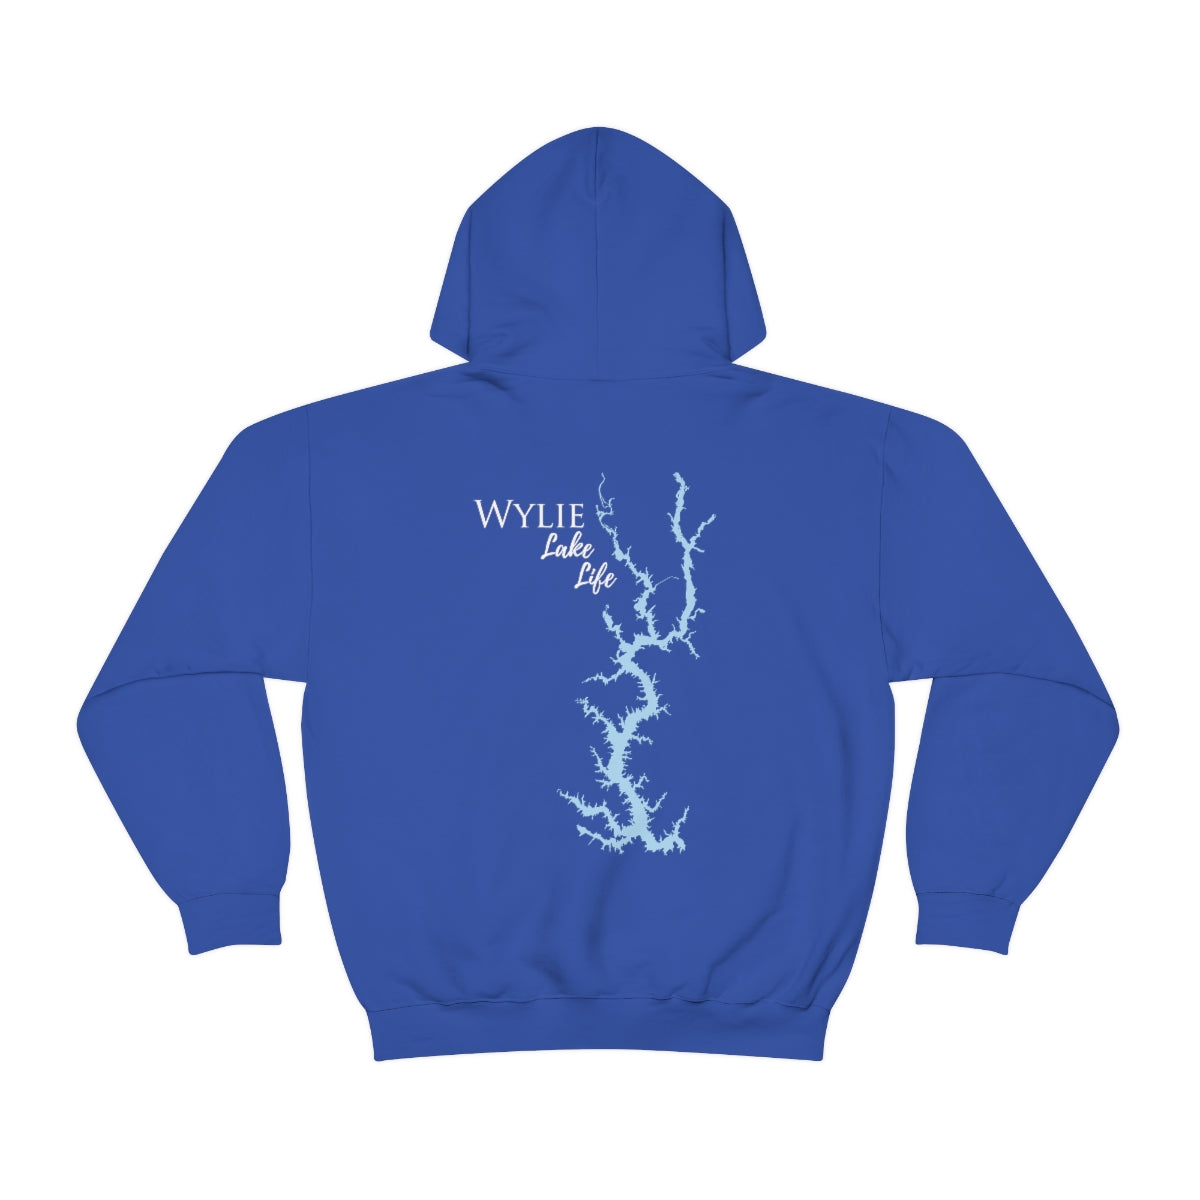 Wylie Lake Life Hoodie - BACK PRINTED - Sweatshirt - nc and sc - North Carolina Lake